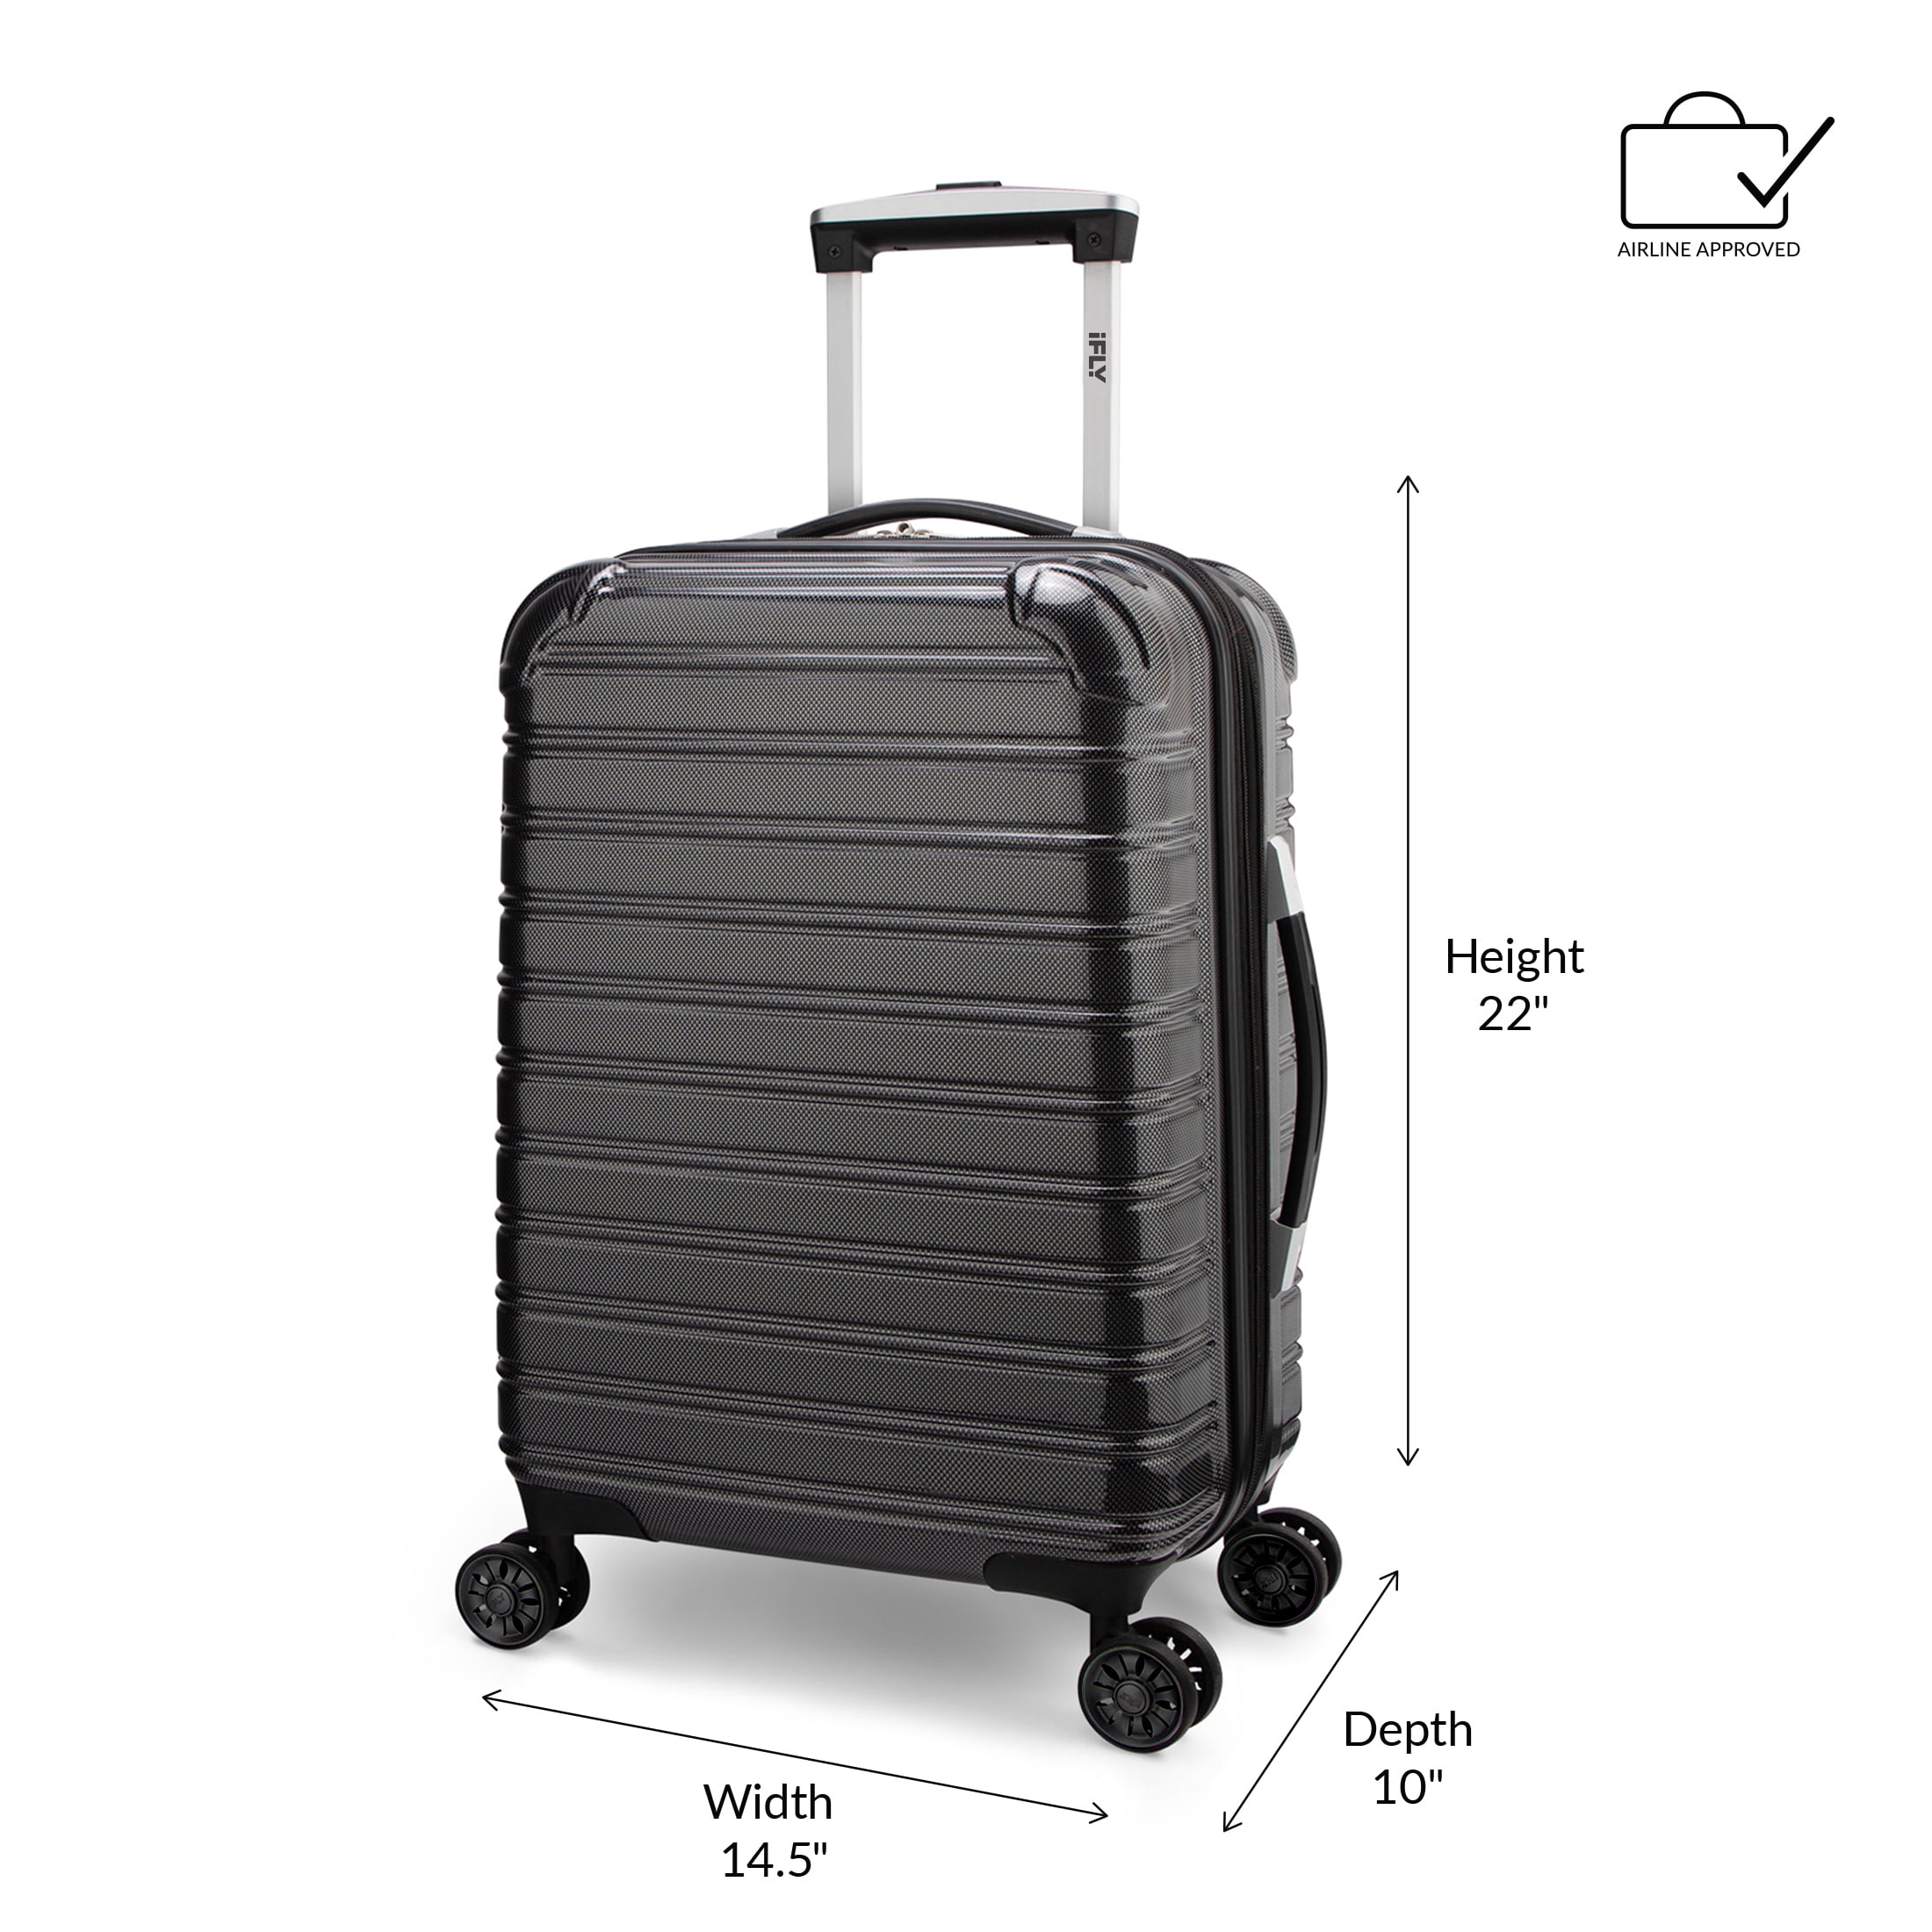 iFLY Hardside Luggage Fibertech 20 Inch Carry-on Luggage, Black